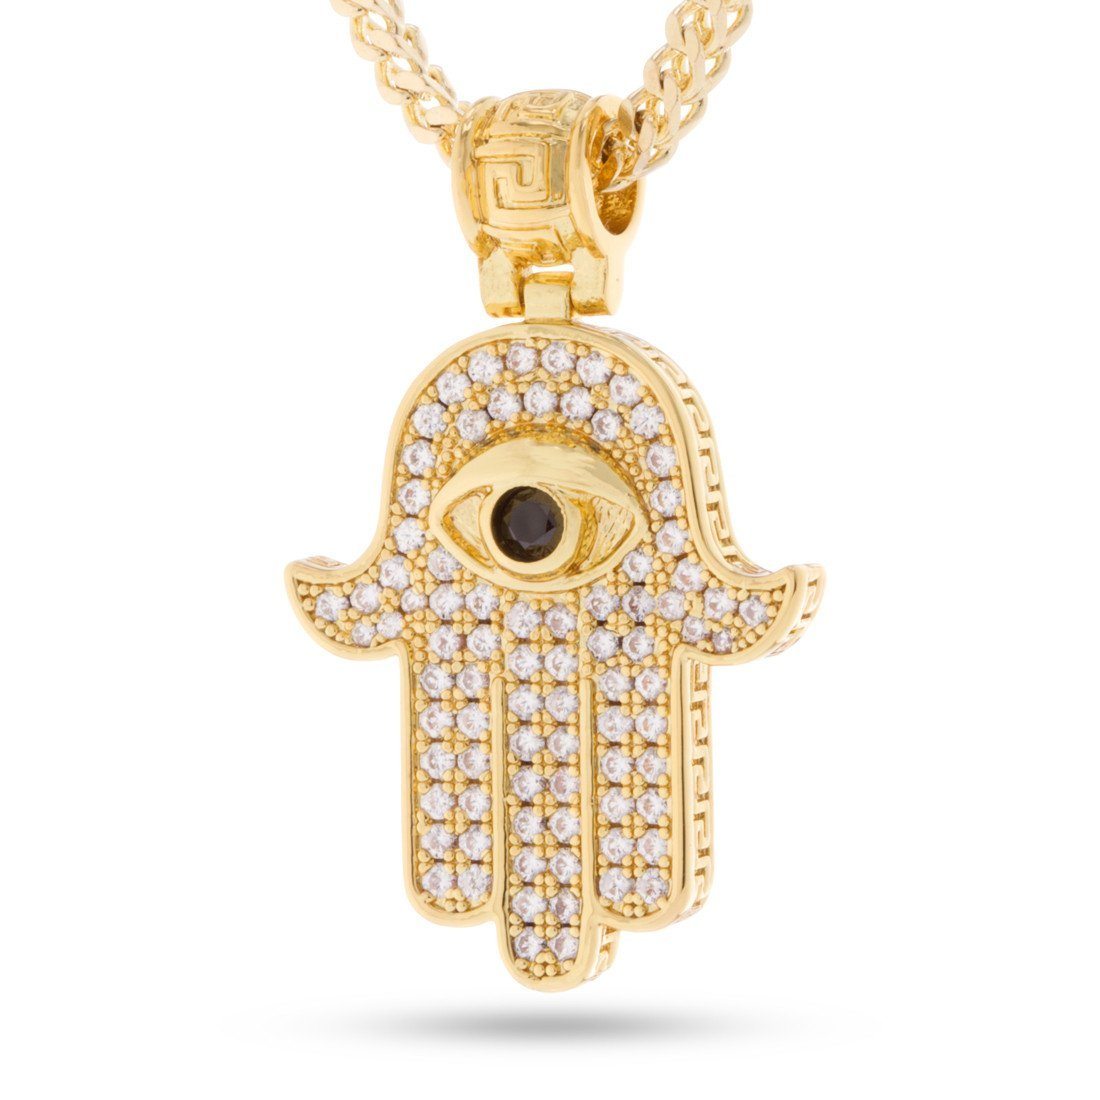 The 14K Gold Hamsa Necklace